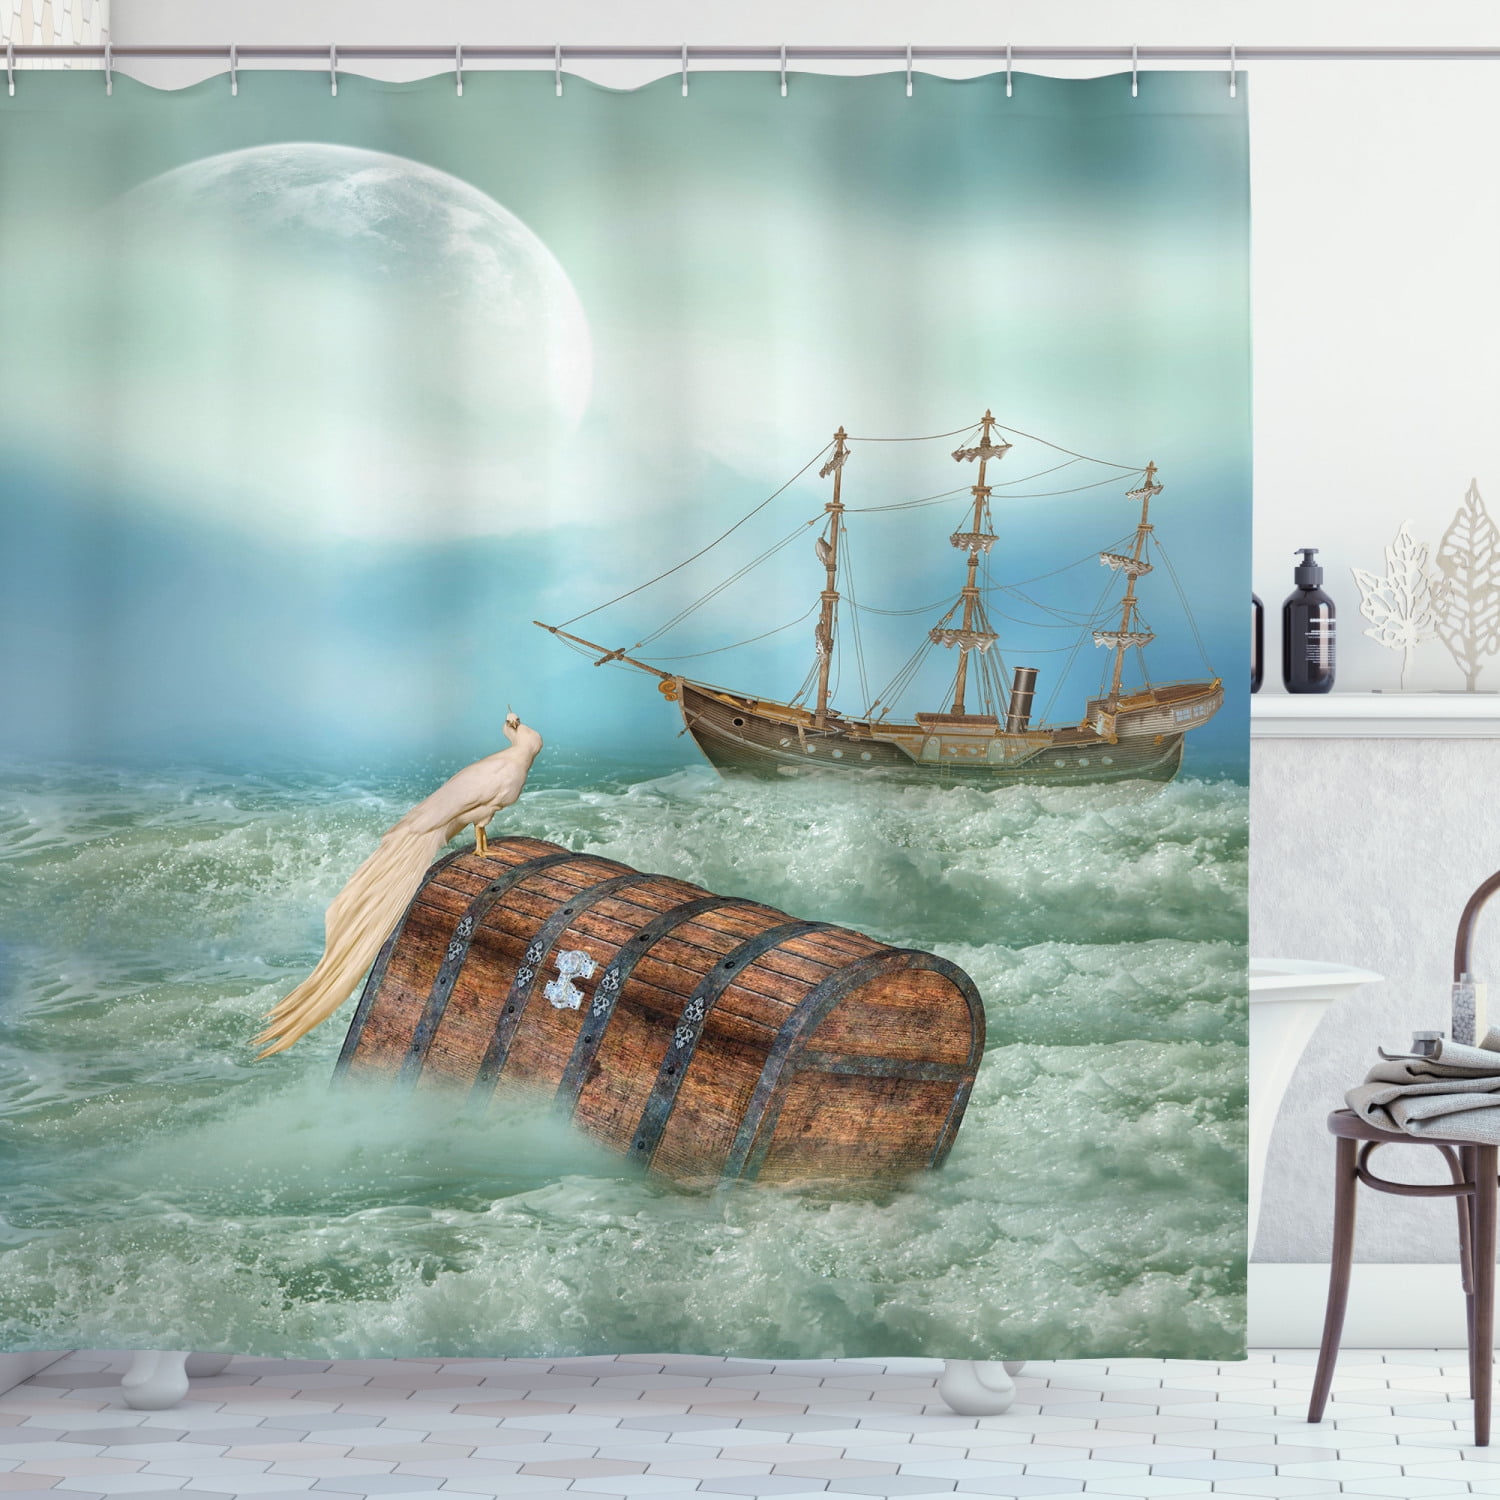 Custom Dark Night Moon Pirate Ship Shower Curtain 100% Polyester Fabric Waterproof Size 66x72inch